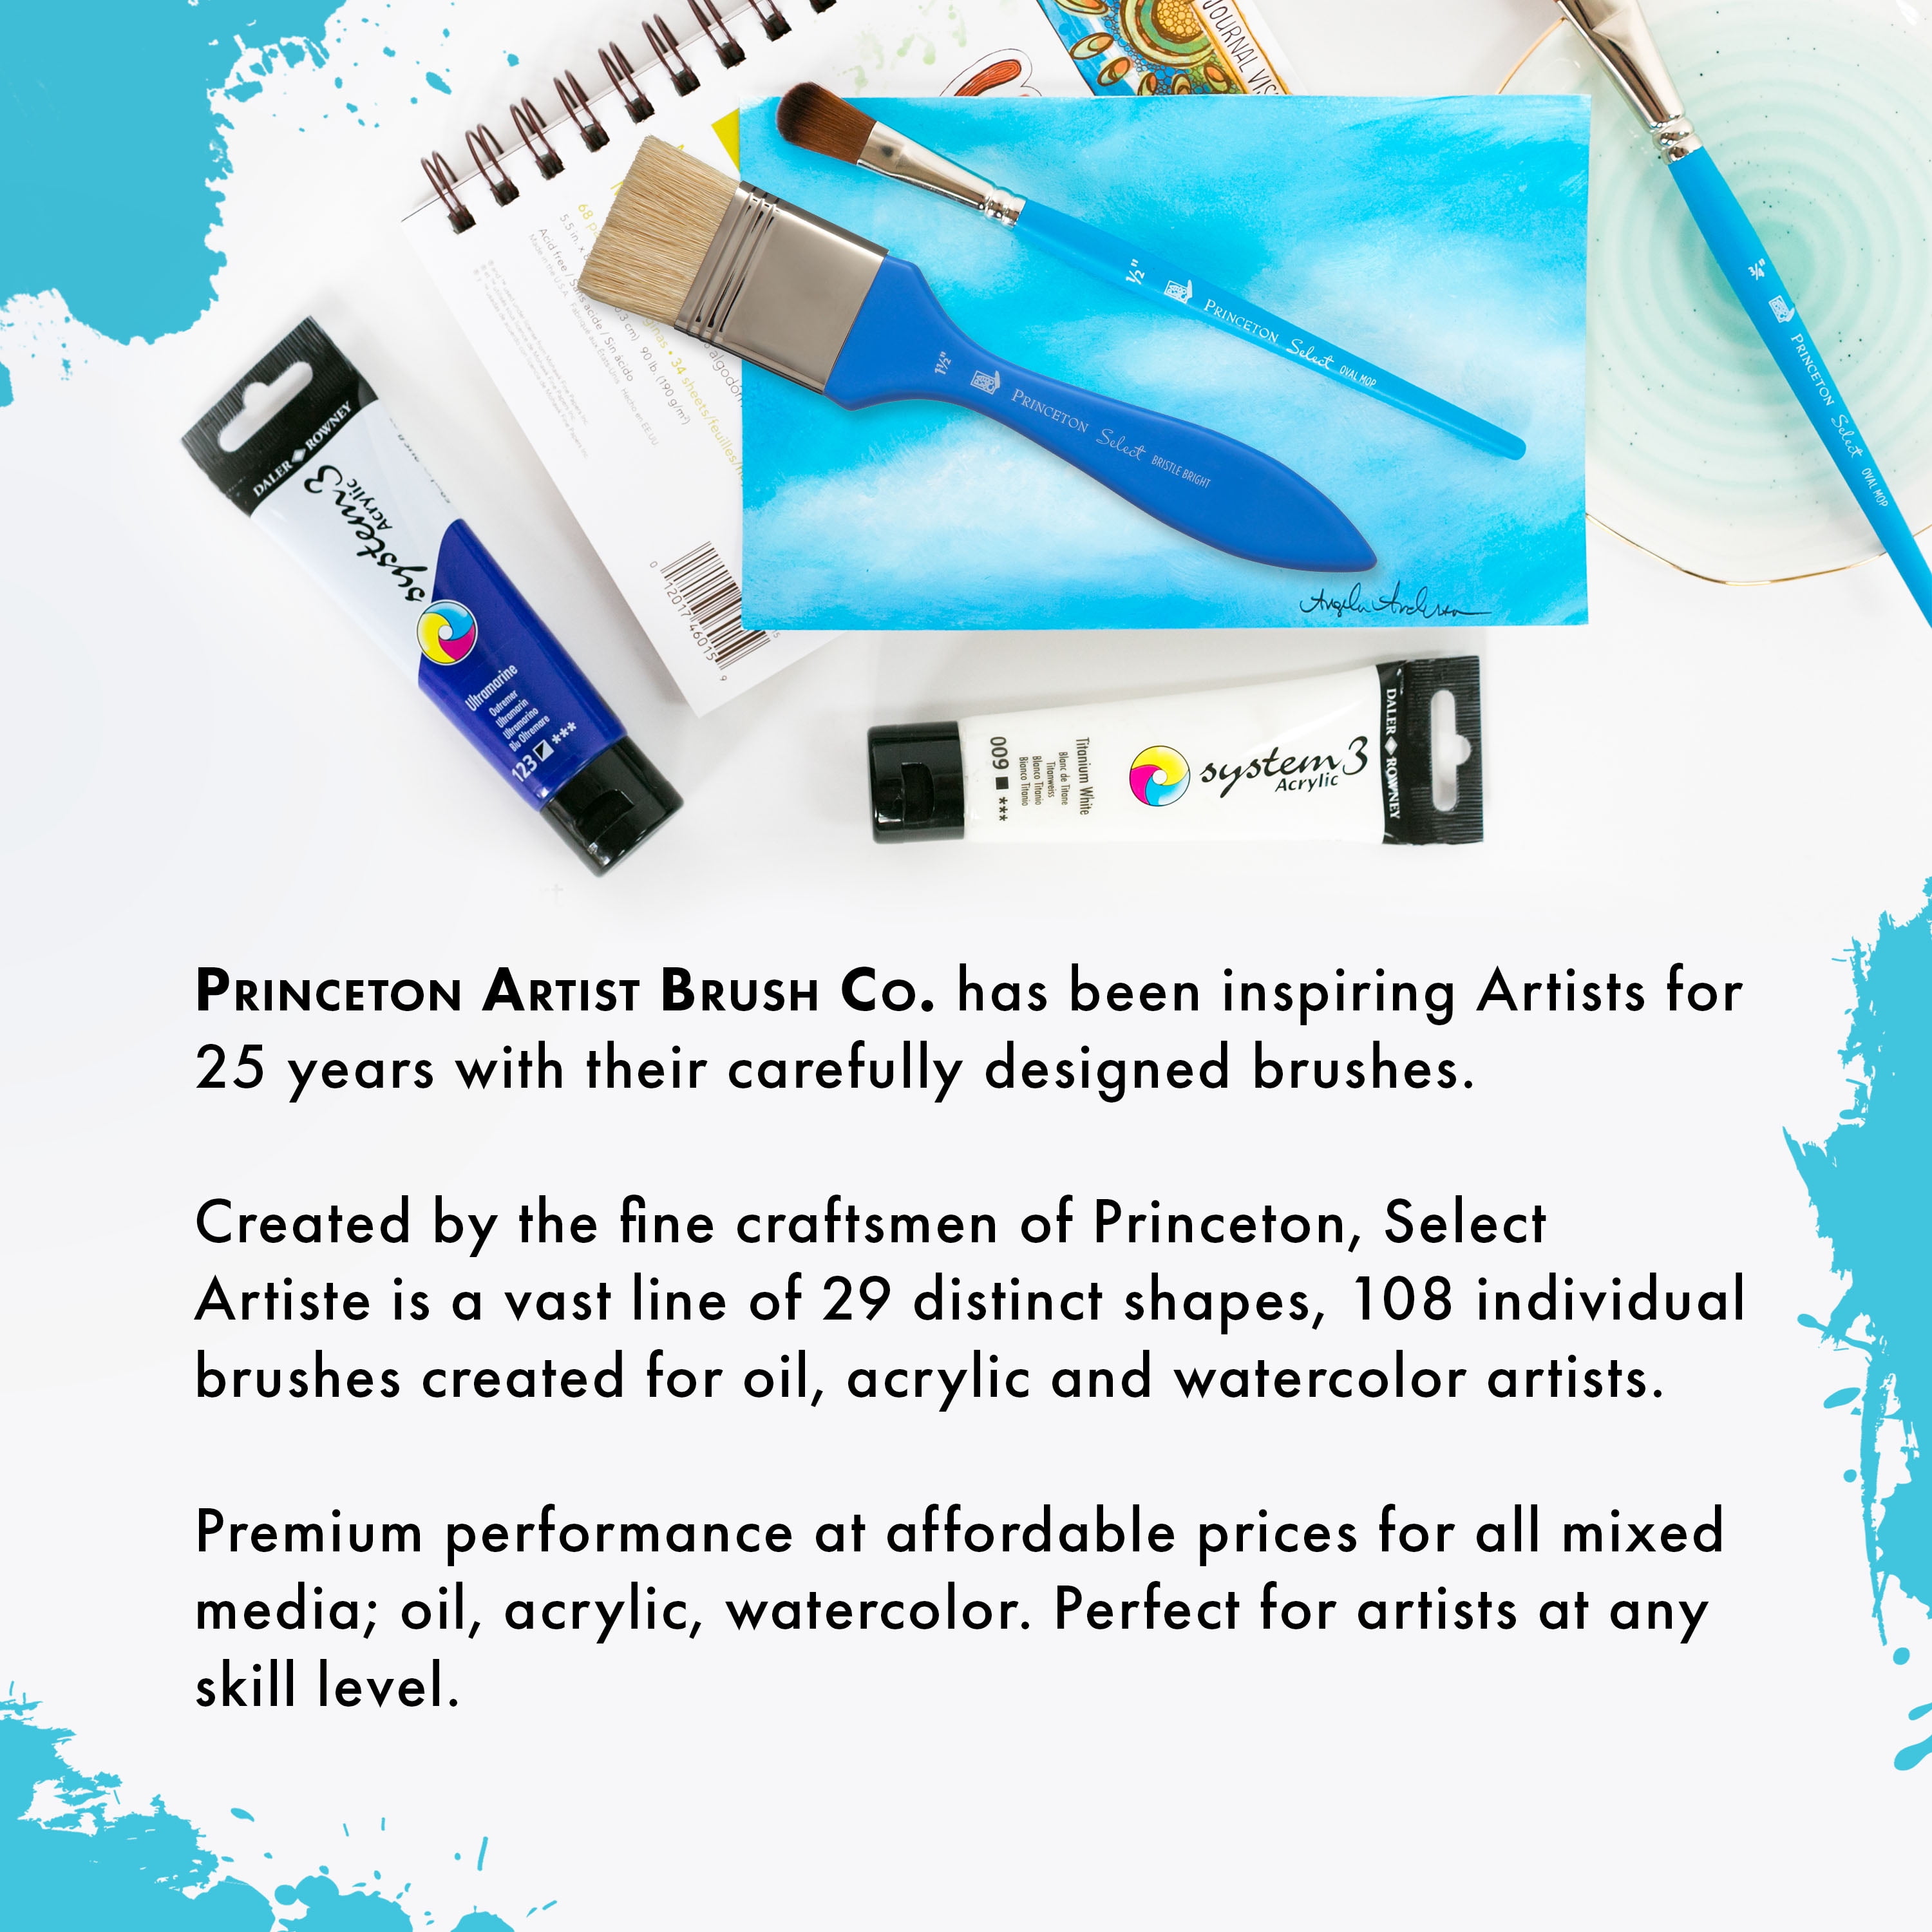 Princeton : Aqua Elite : Synthetic KS : Watercolour Brush : Series 4850 :  Short Handle : Essential Set of 4